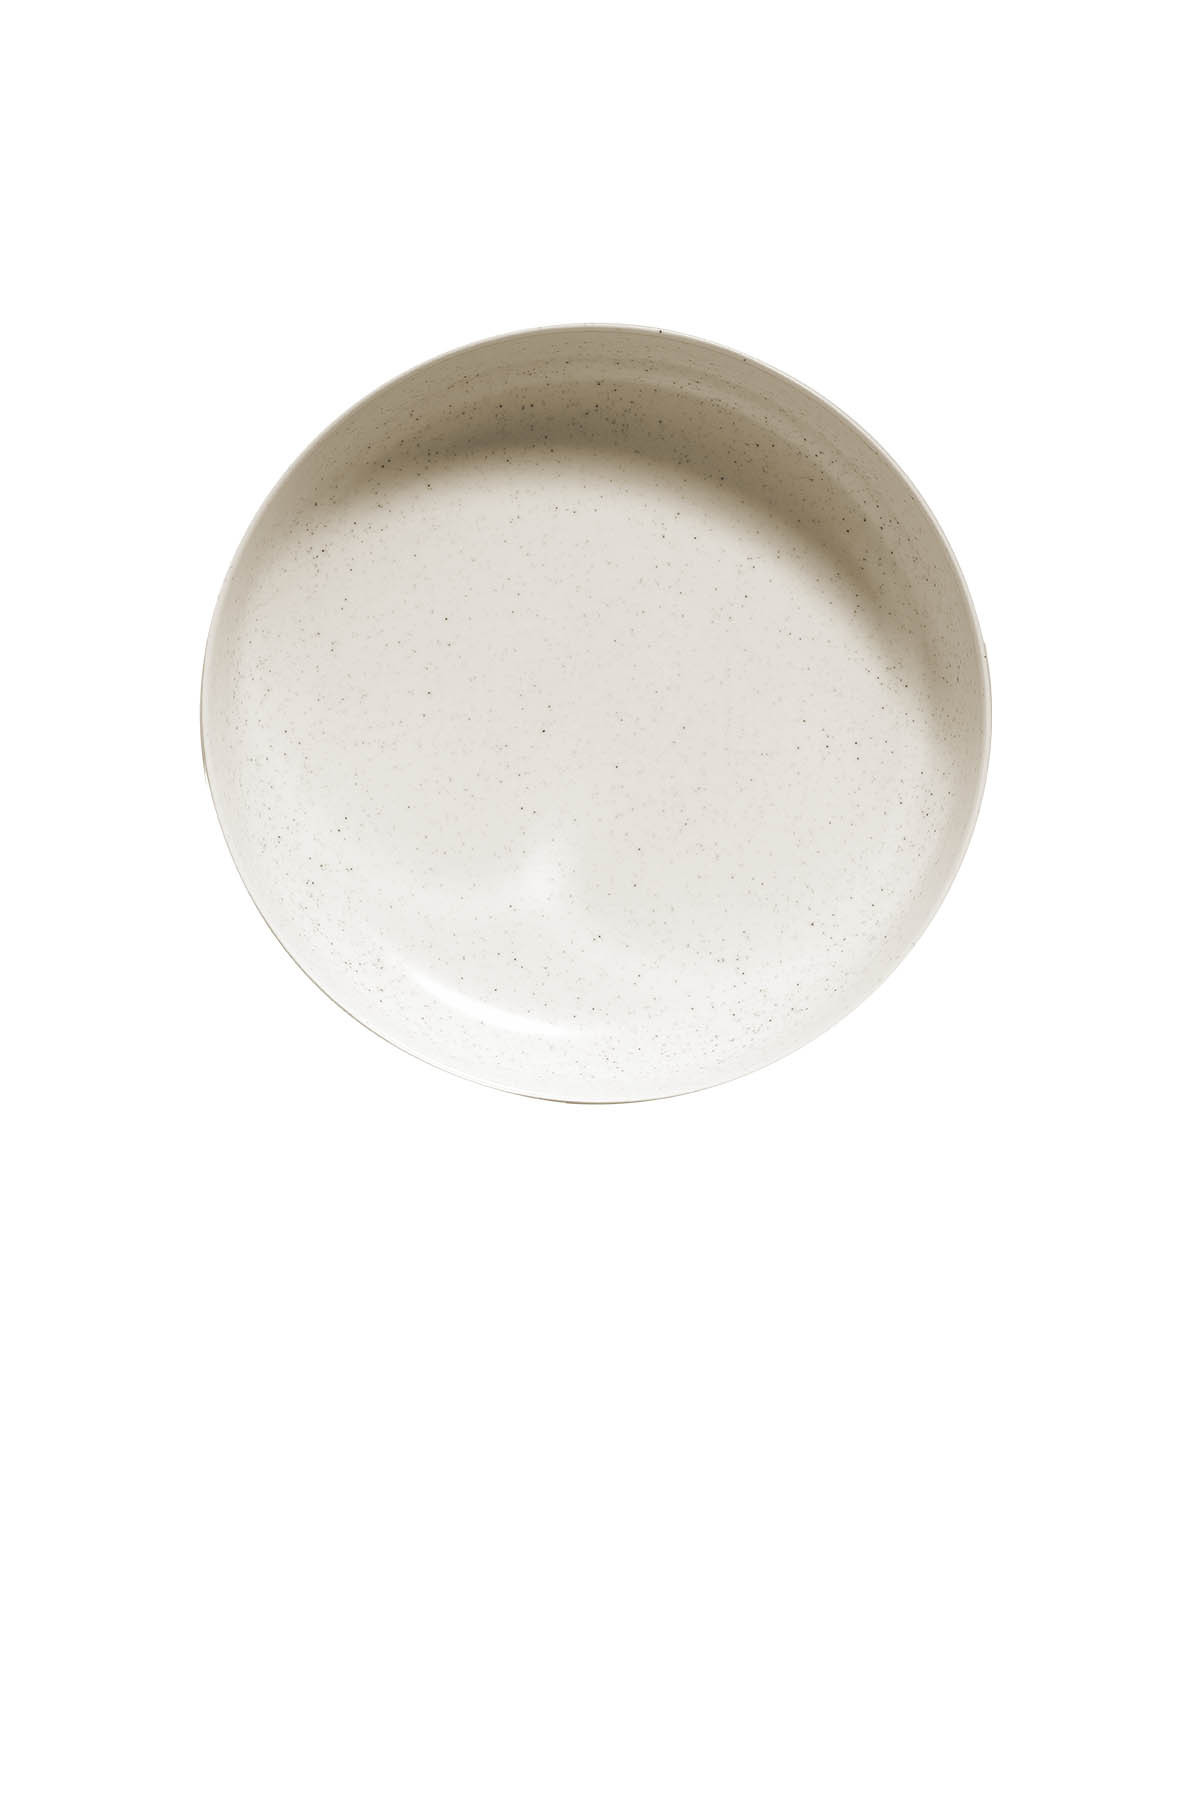 Kütahya Porselen Moderna 20cm.Çukur Tabak Pearl P200 Semı Mat Mavı,Beneklı